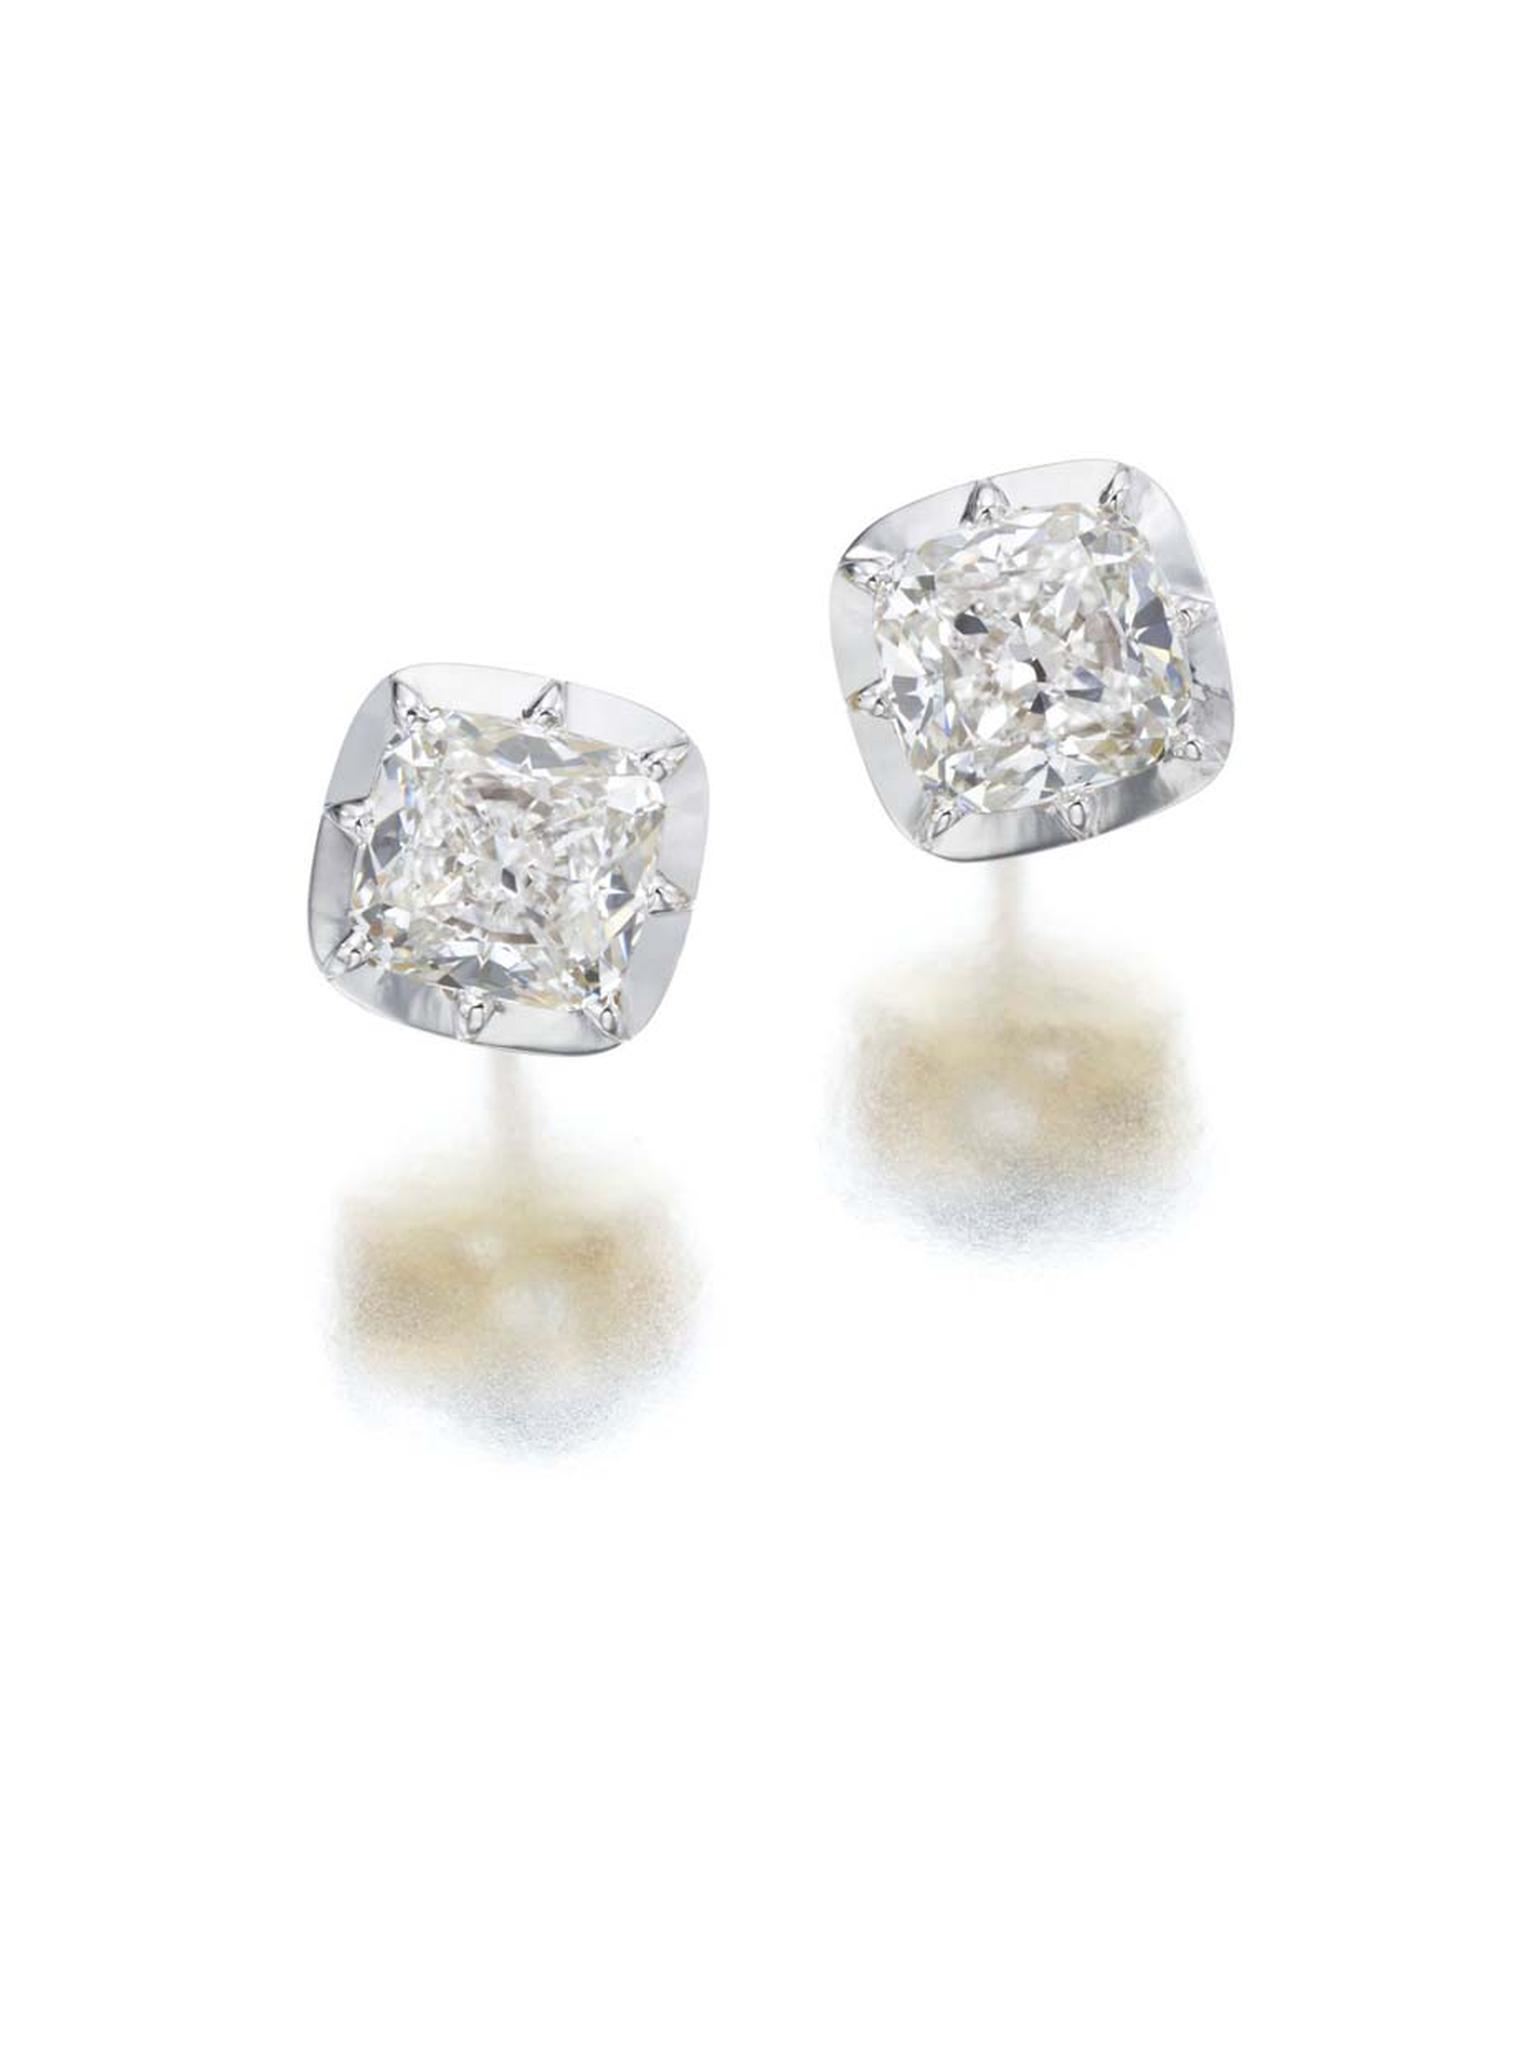 Jessica McCormack Snowdrop diamond studs in white gold, set with 3.06ct cushion-cut diamonds